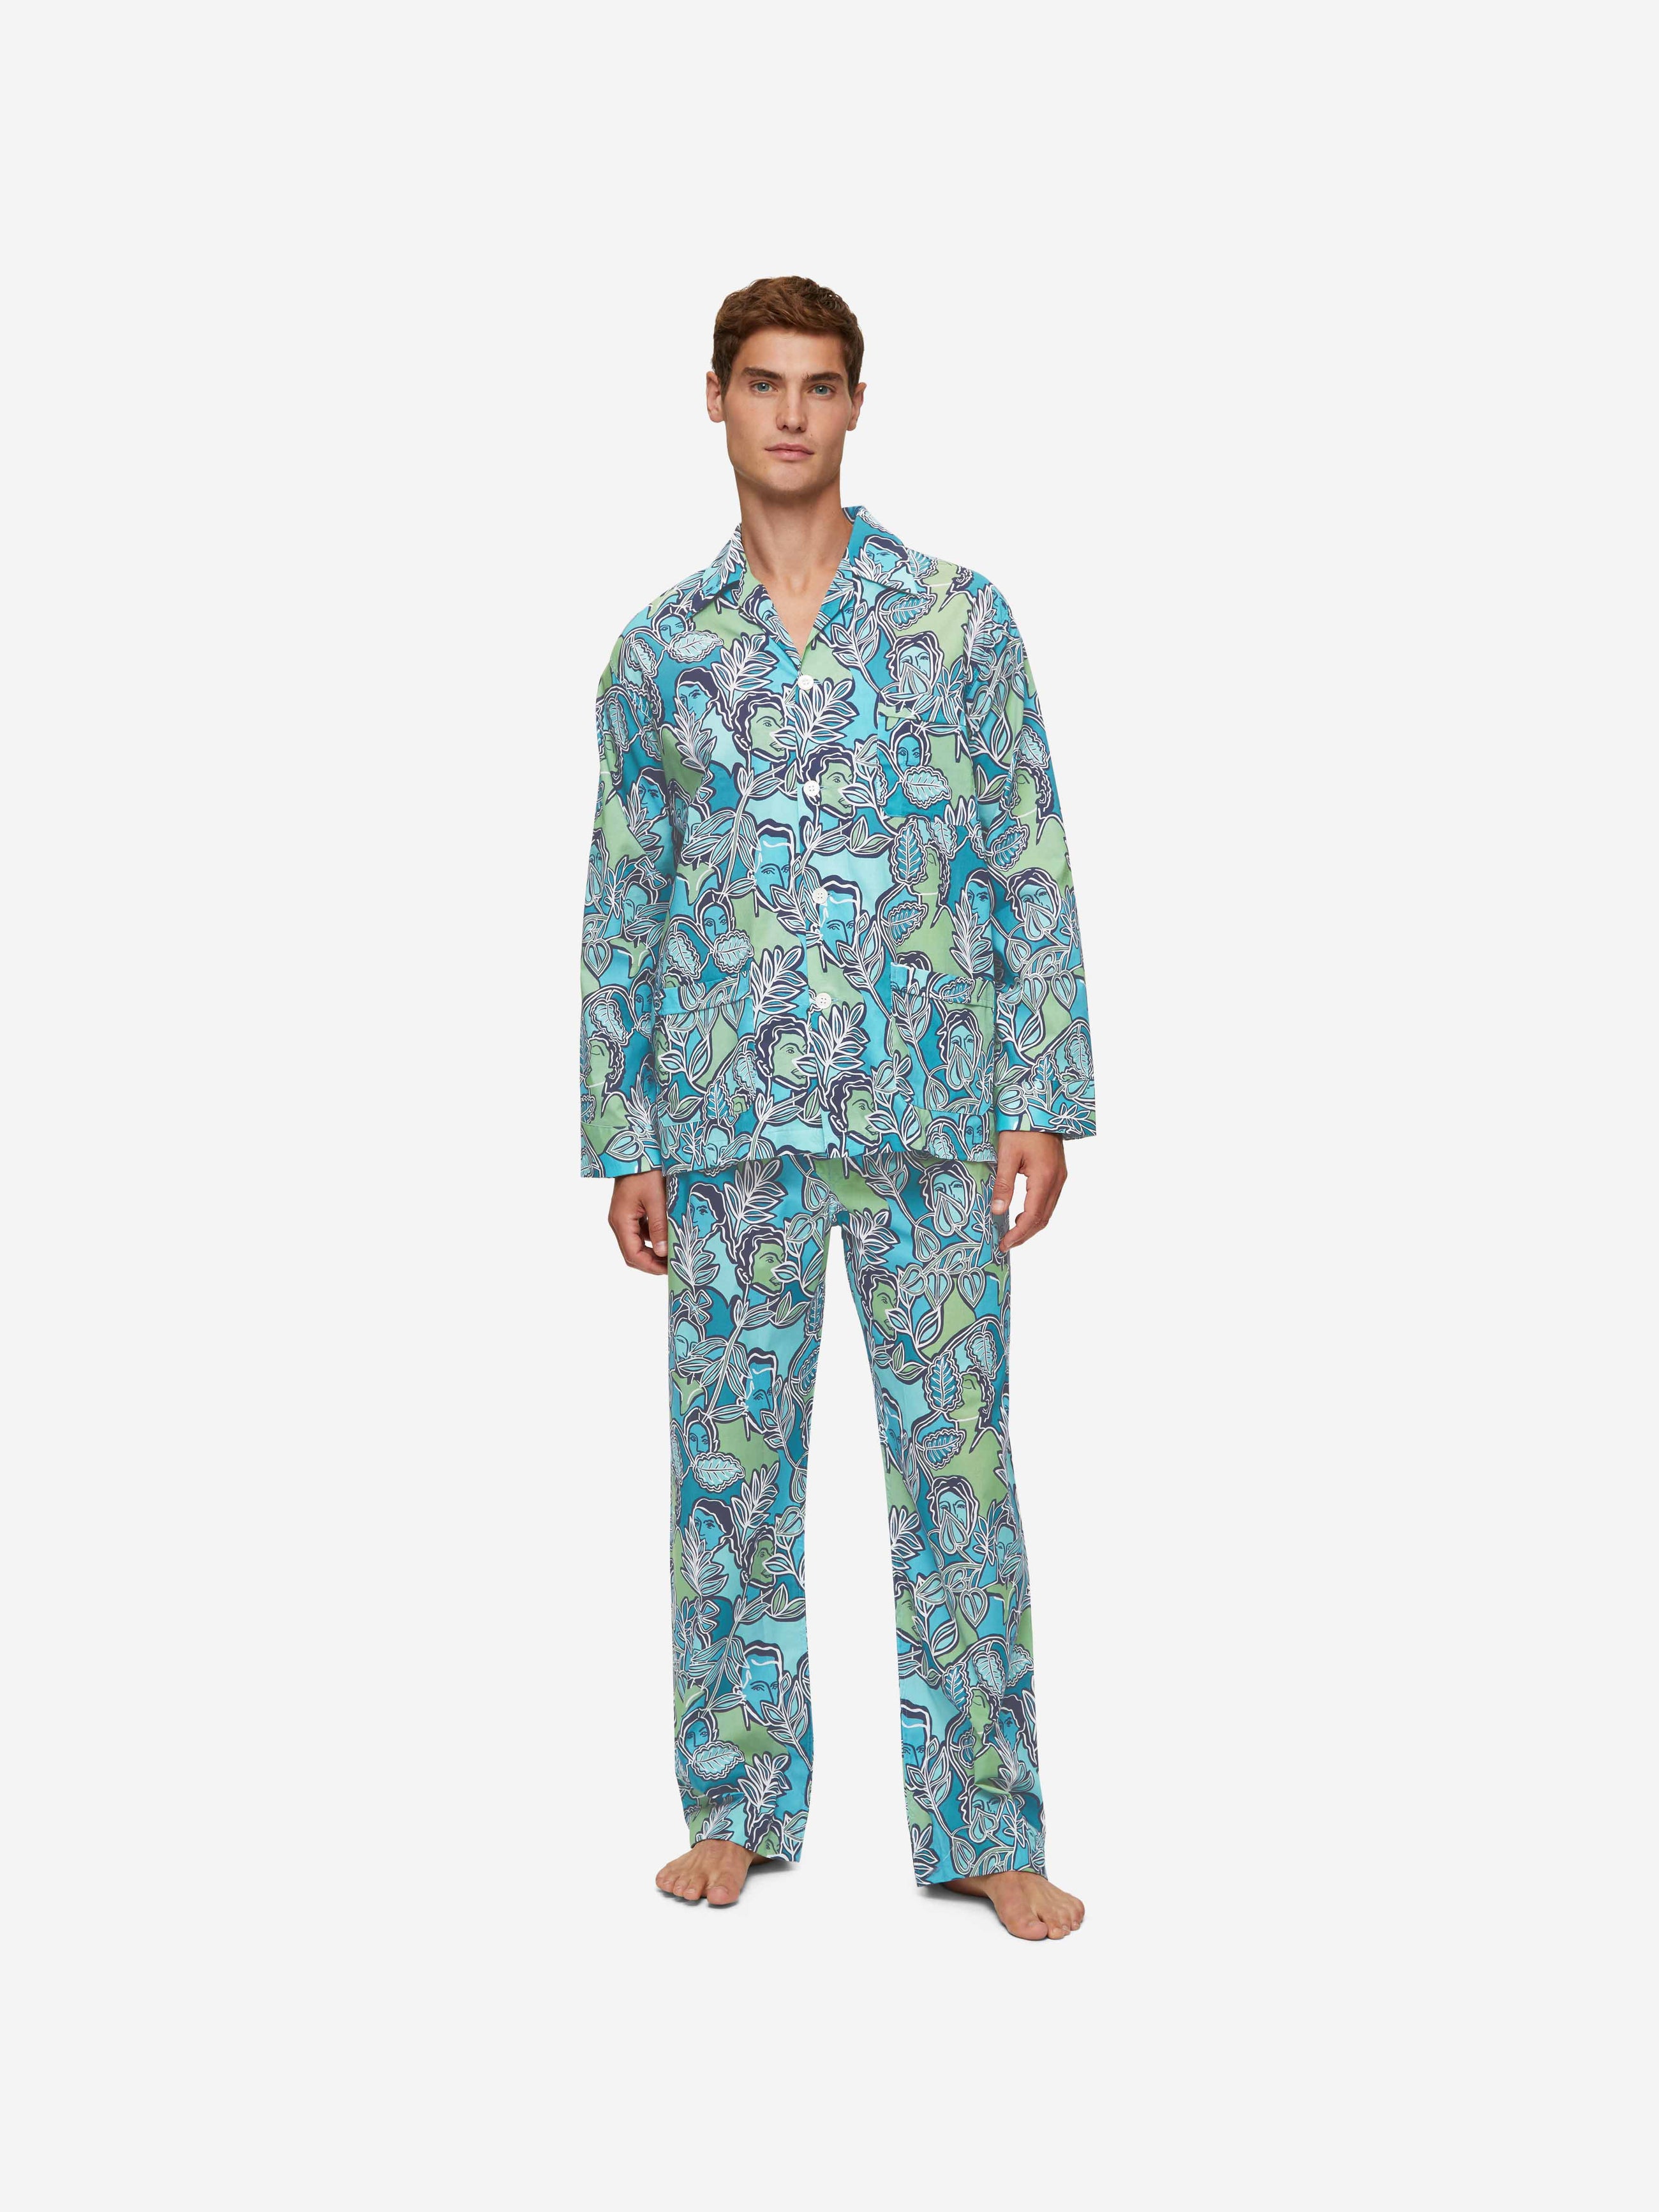 Men's Classic Fit Pyjamas Ledbury 57 Cotton Batiste Multi